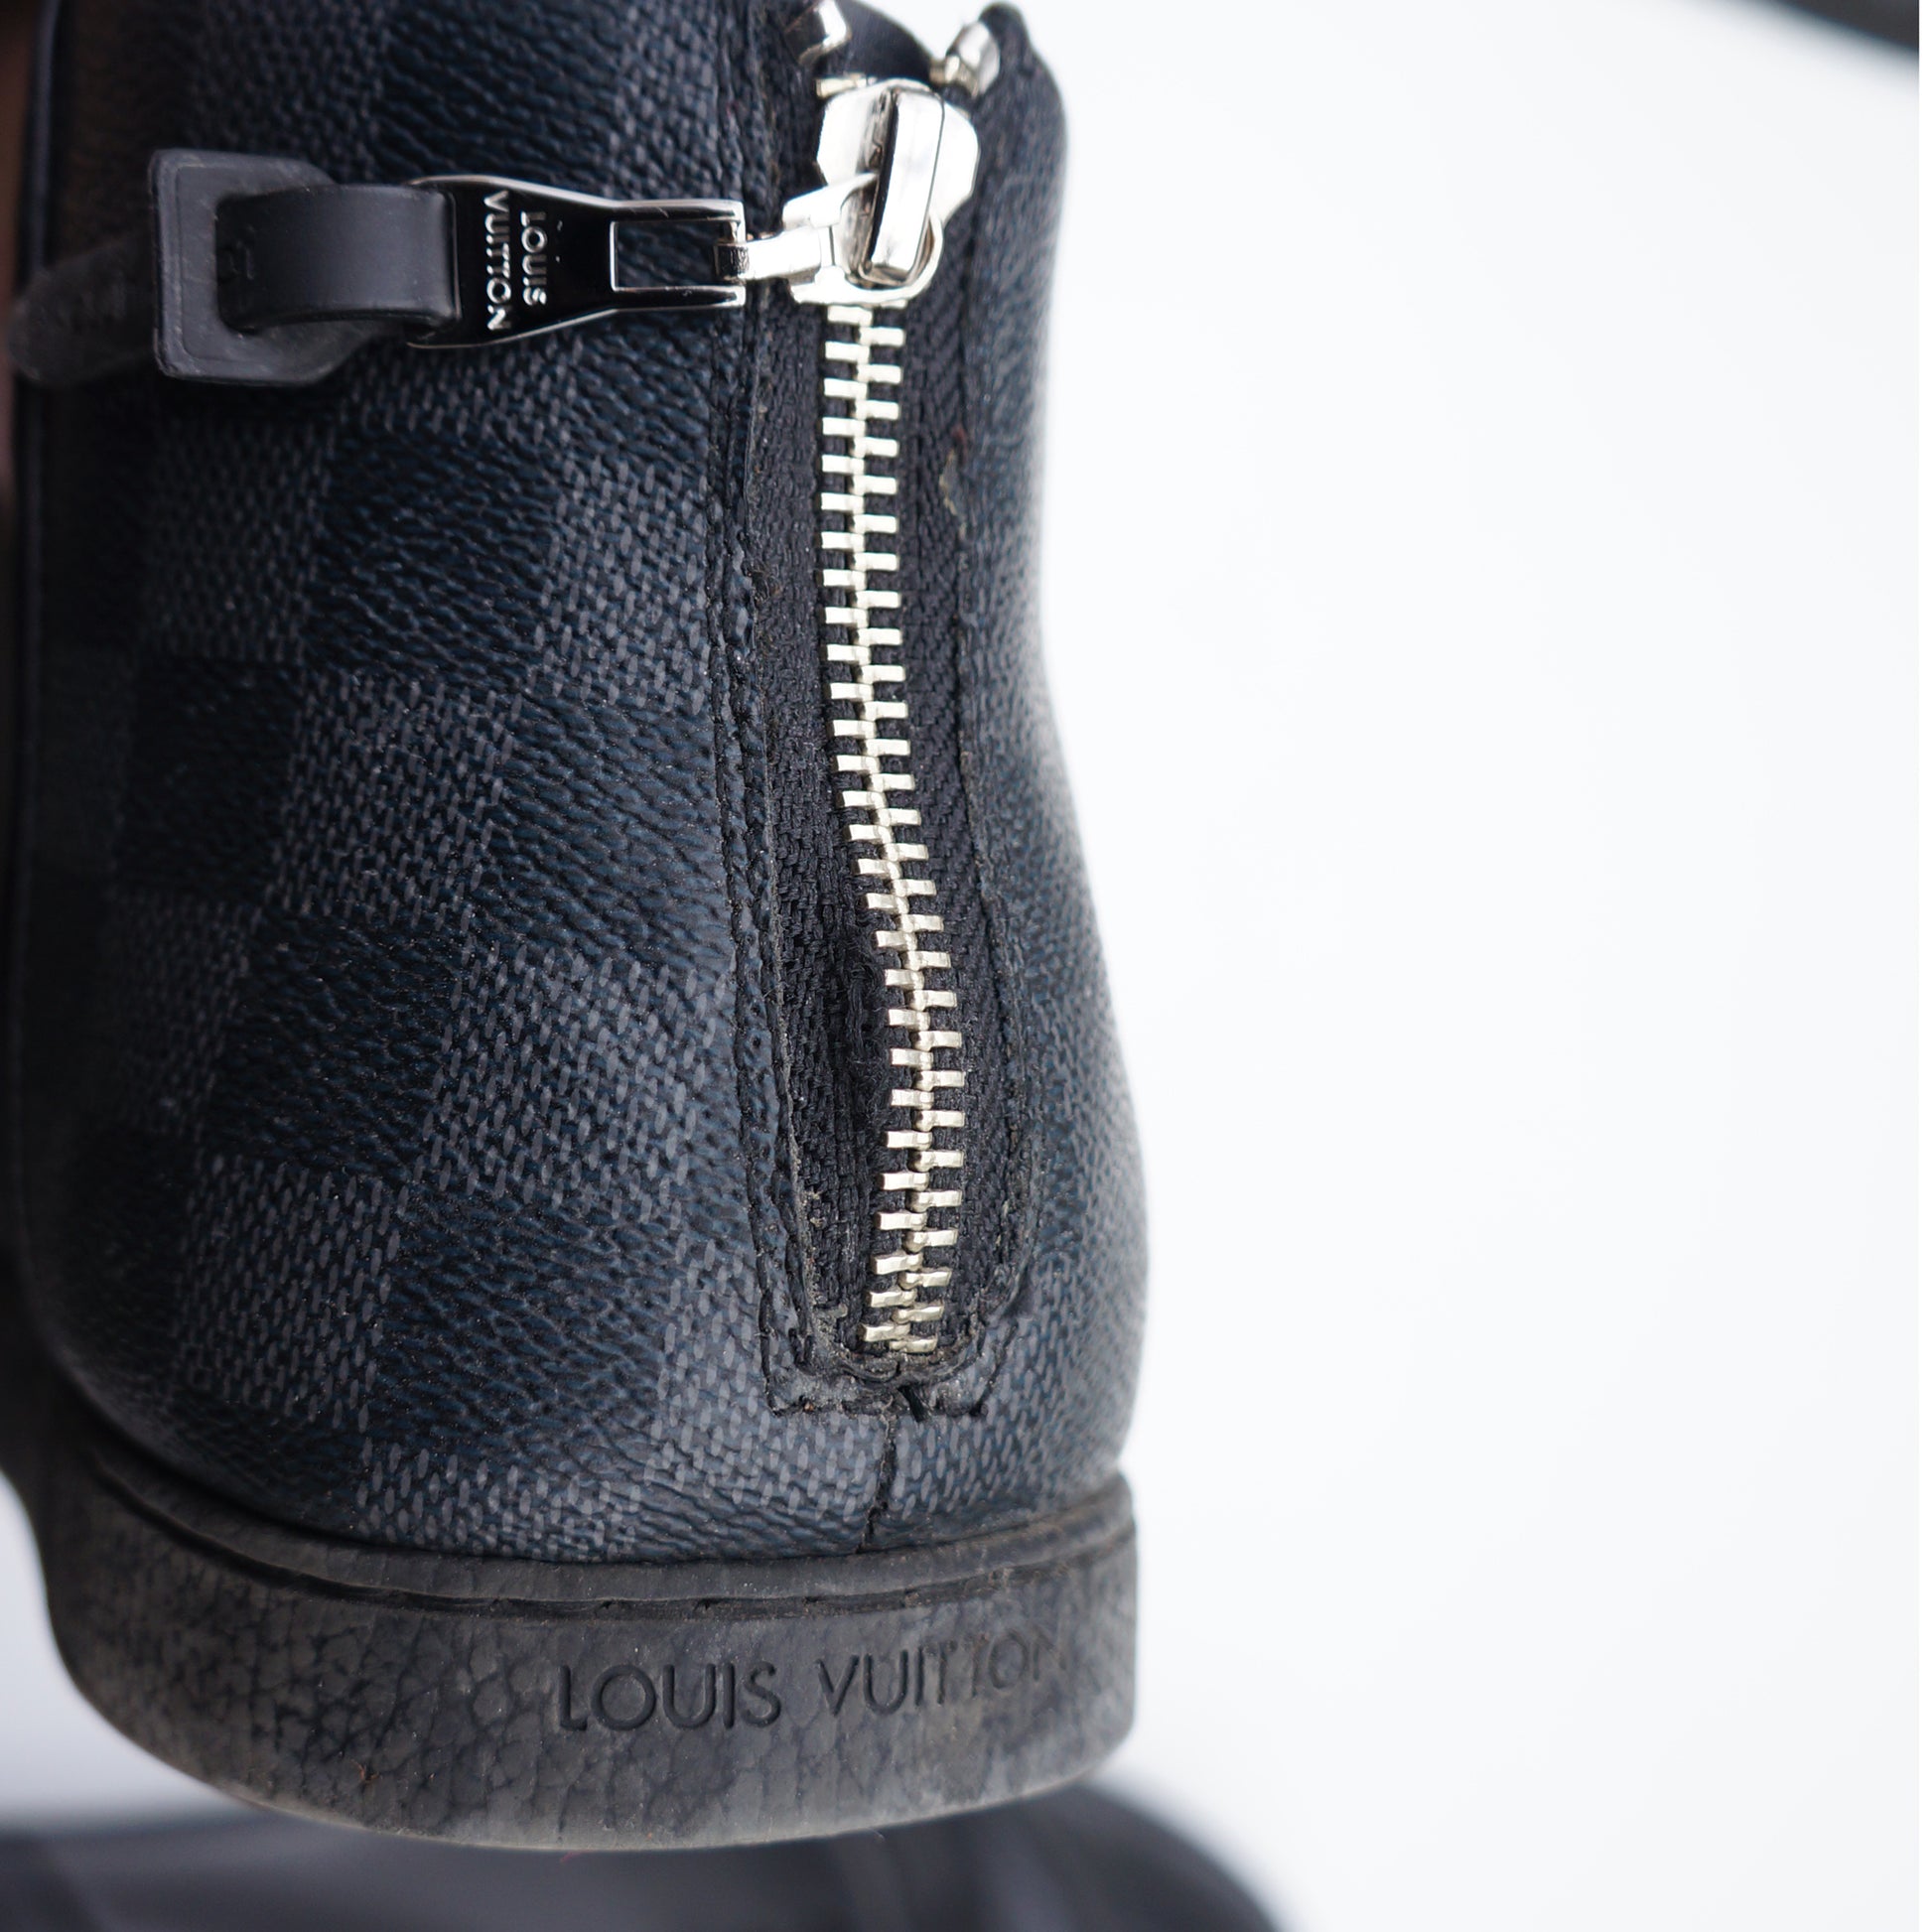 Louis Vuitton Damier Graphite high top sneaker – Uptown Cheapskate